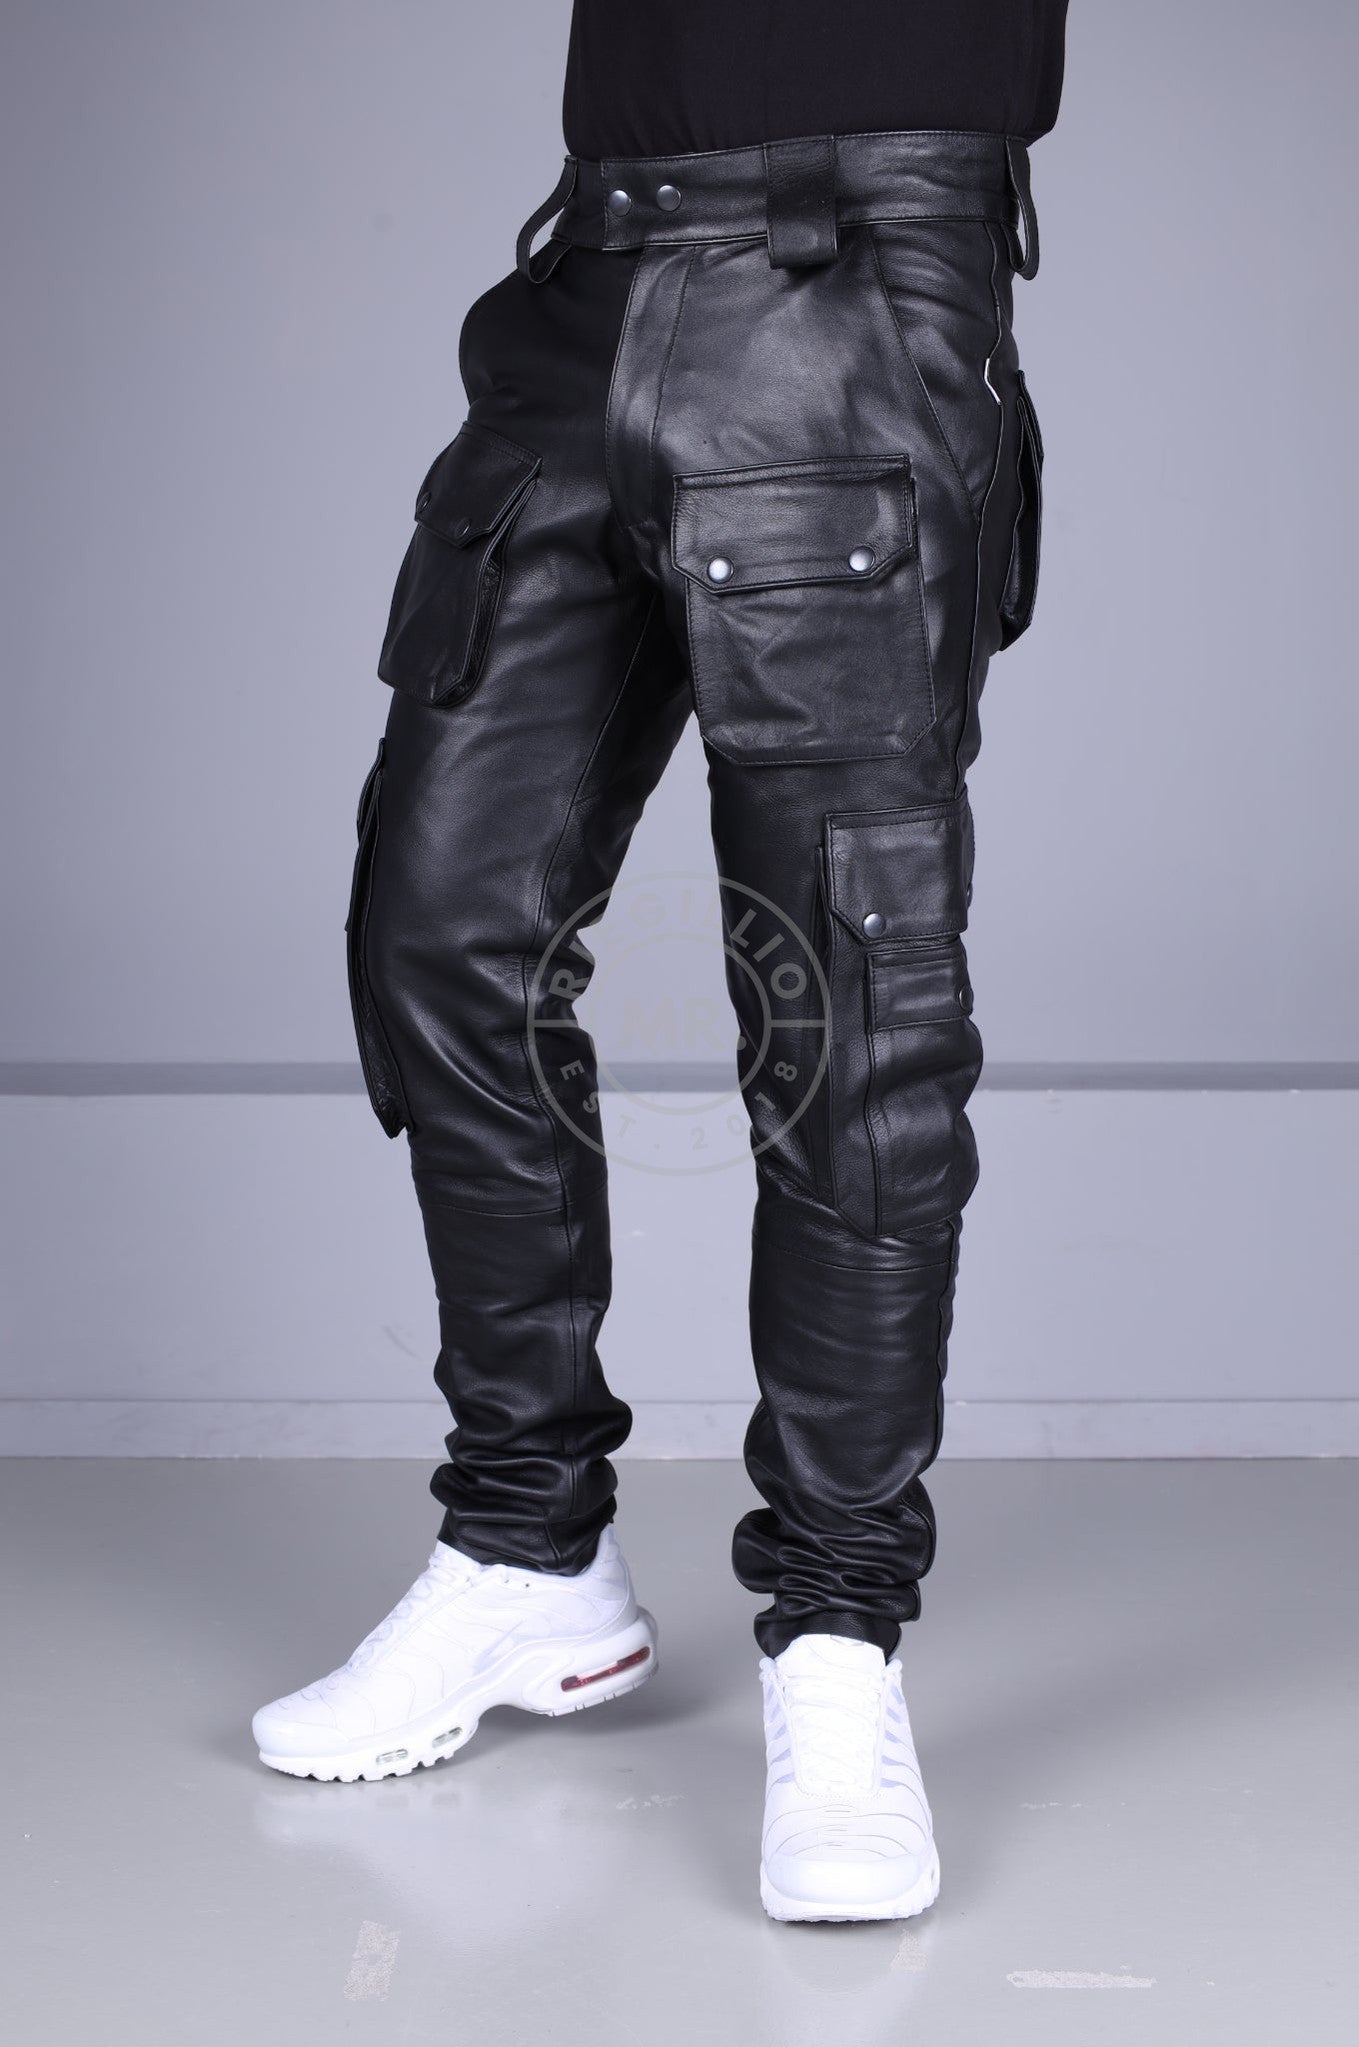 Black Leather Pants - Snap Pockets at MR. Riegillio